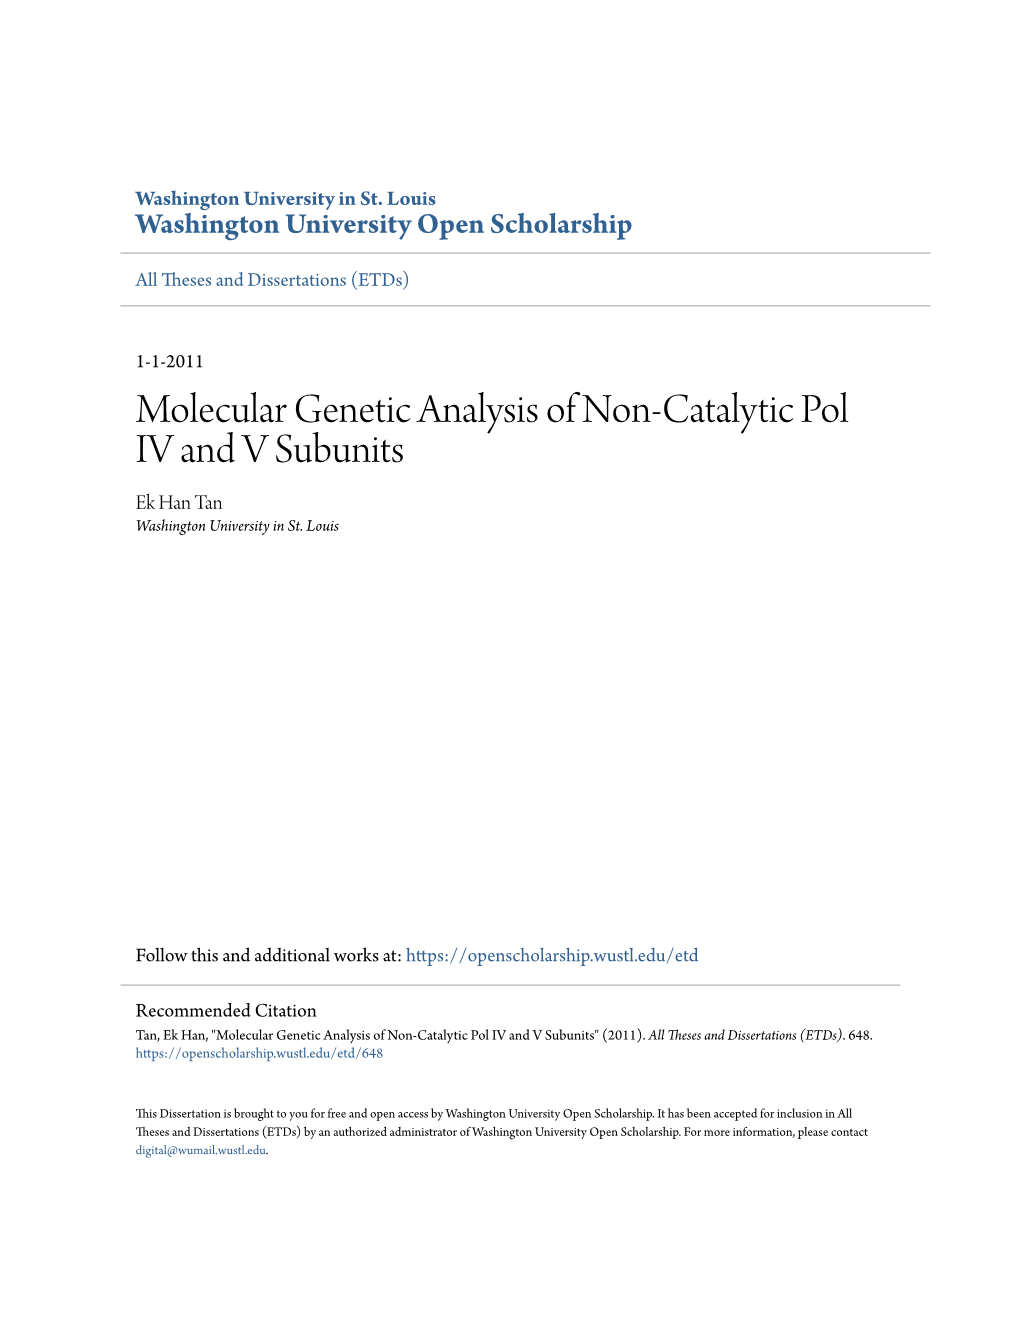 Molecular Genetic Analysis of Non-Catalytic Pol IV and V Subunits Ek Han Tan Washington University in St